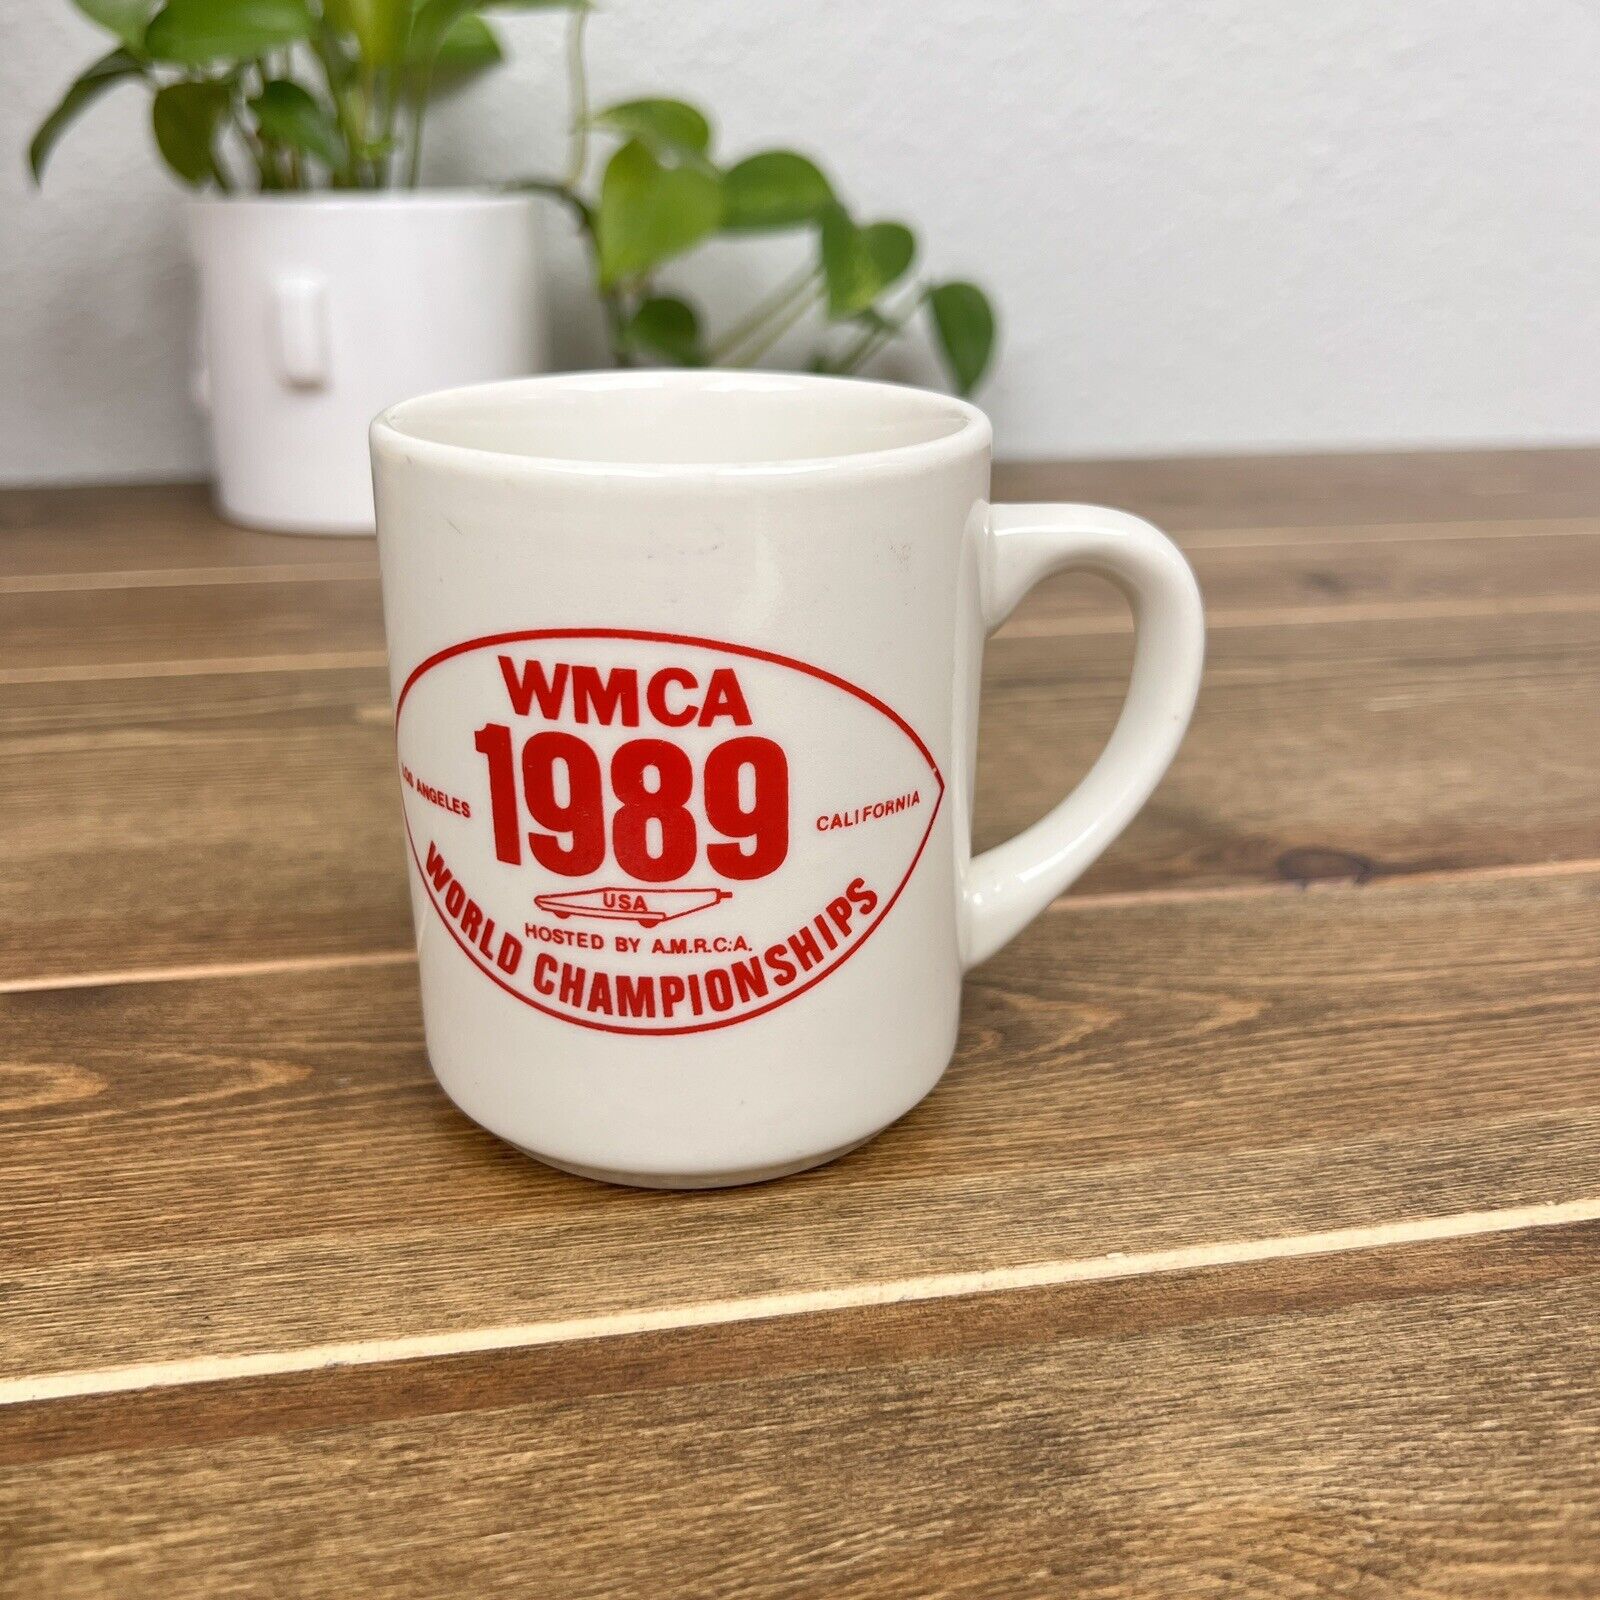 Vintage Los Angeles, California 1989 WMCA Championship Coffee Mug